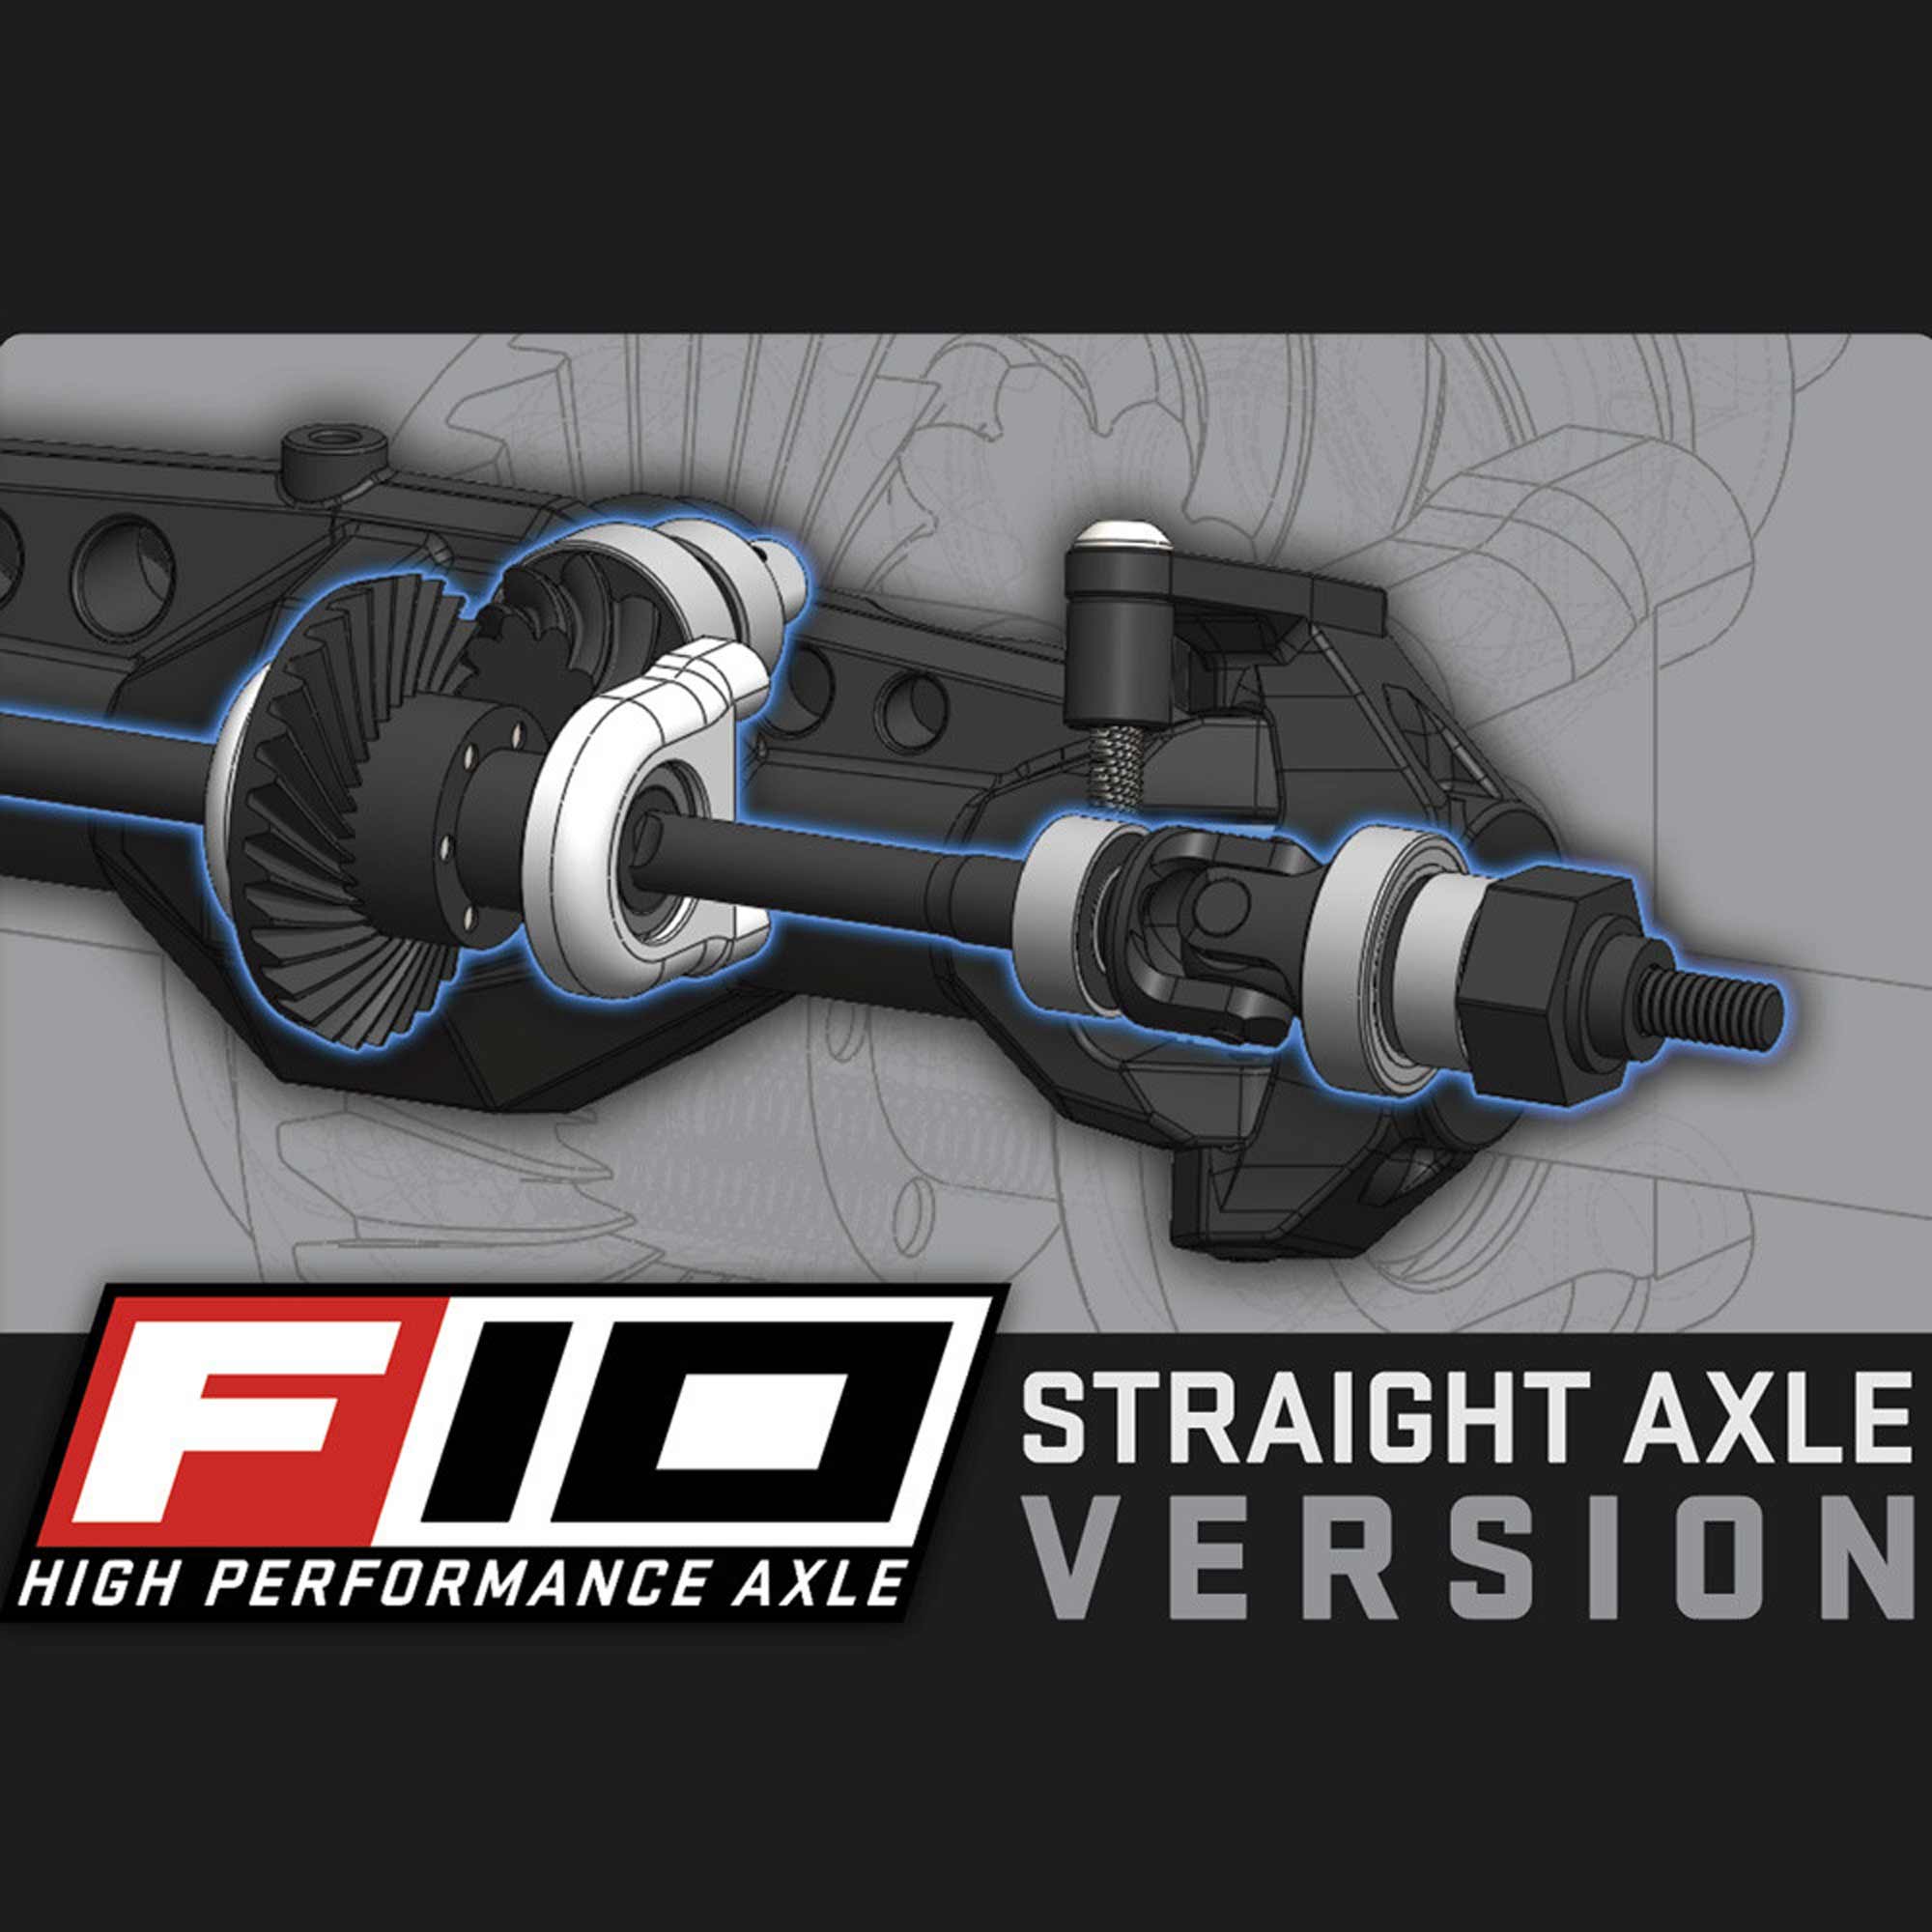 1/10 VS4-10 Phoenix Straight Axle Rock Crawler Kit